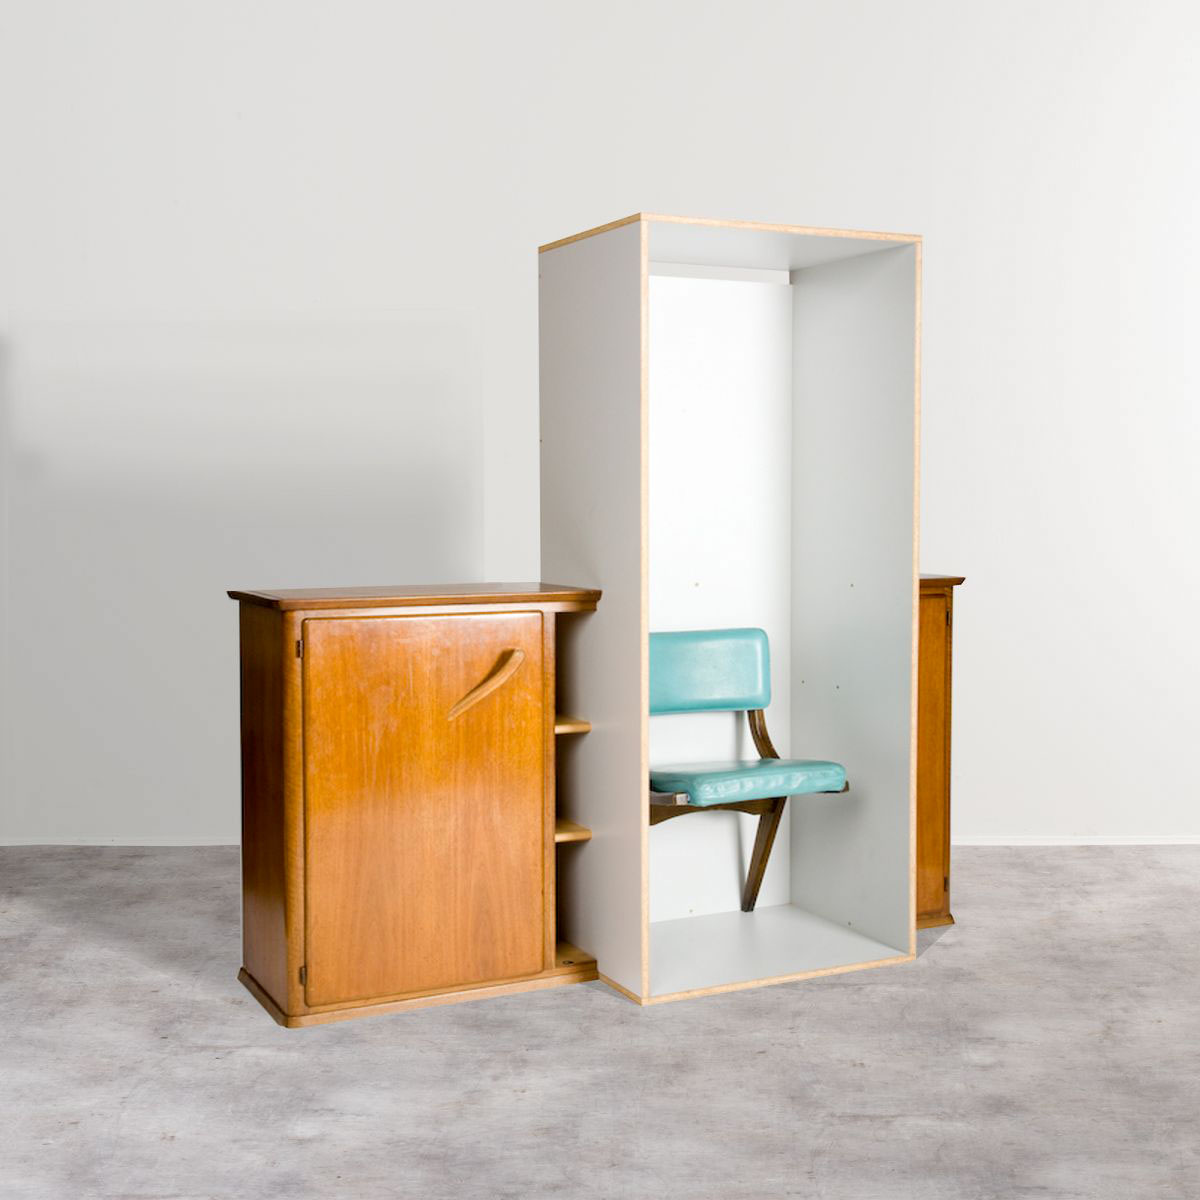 Mobile contenitore con sedia 'Somerset House/Chair into Cabinet' Martino Gamper pic-1